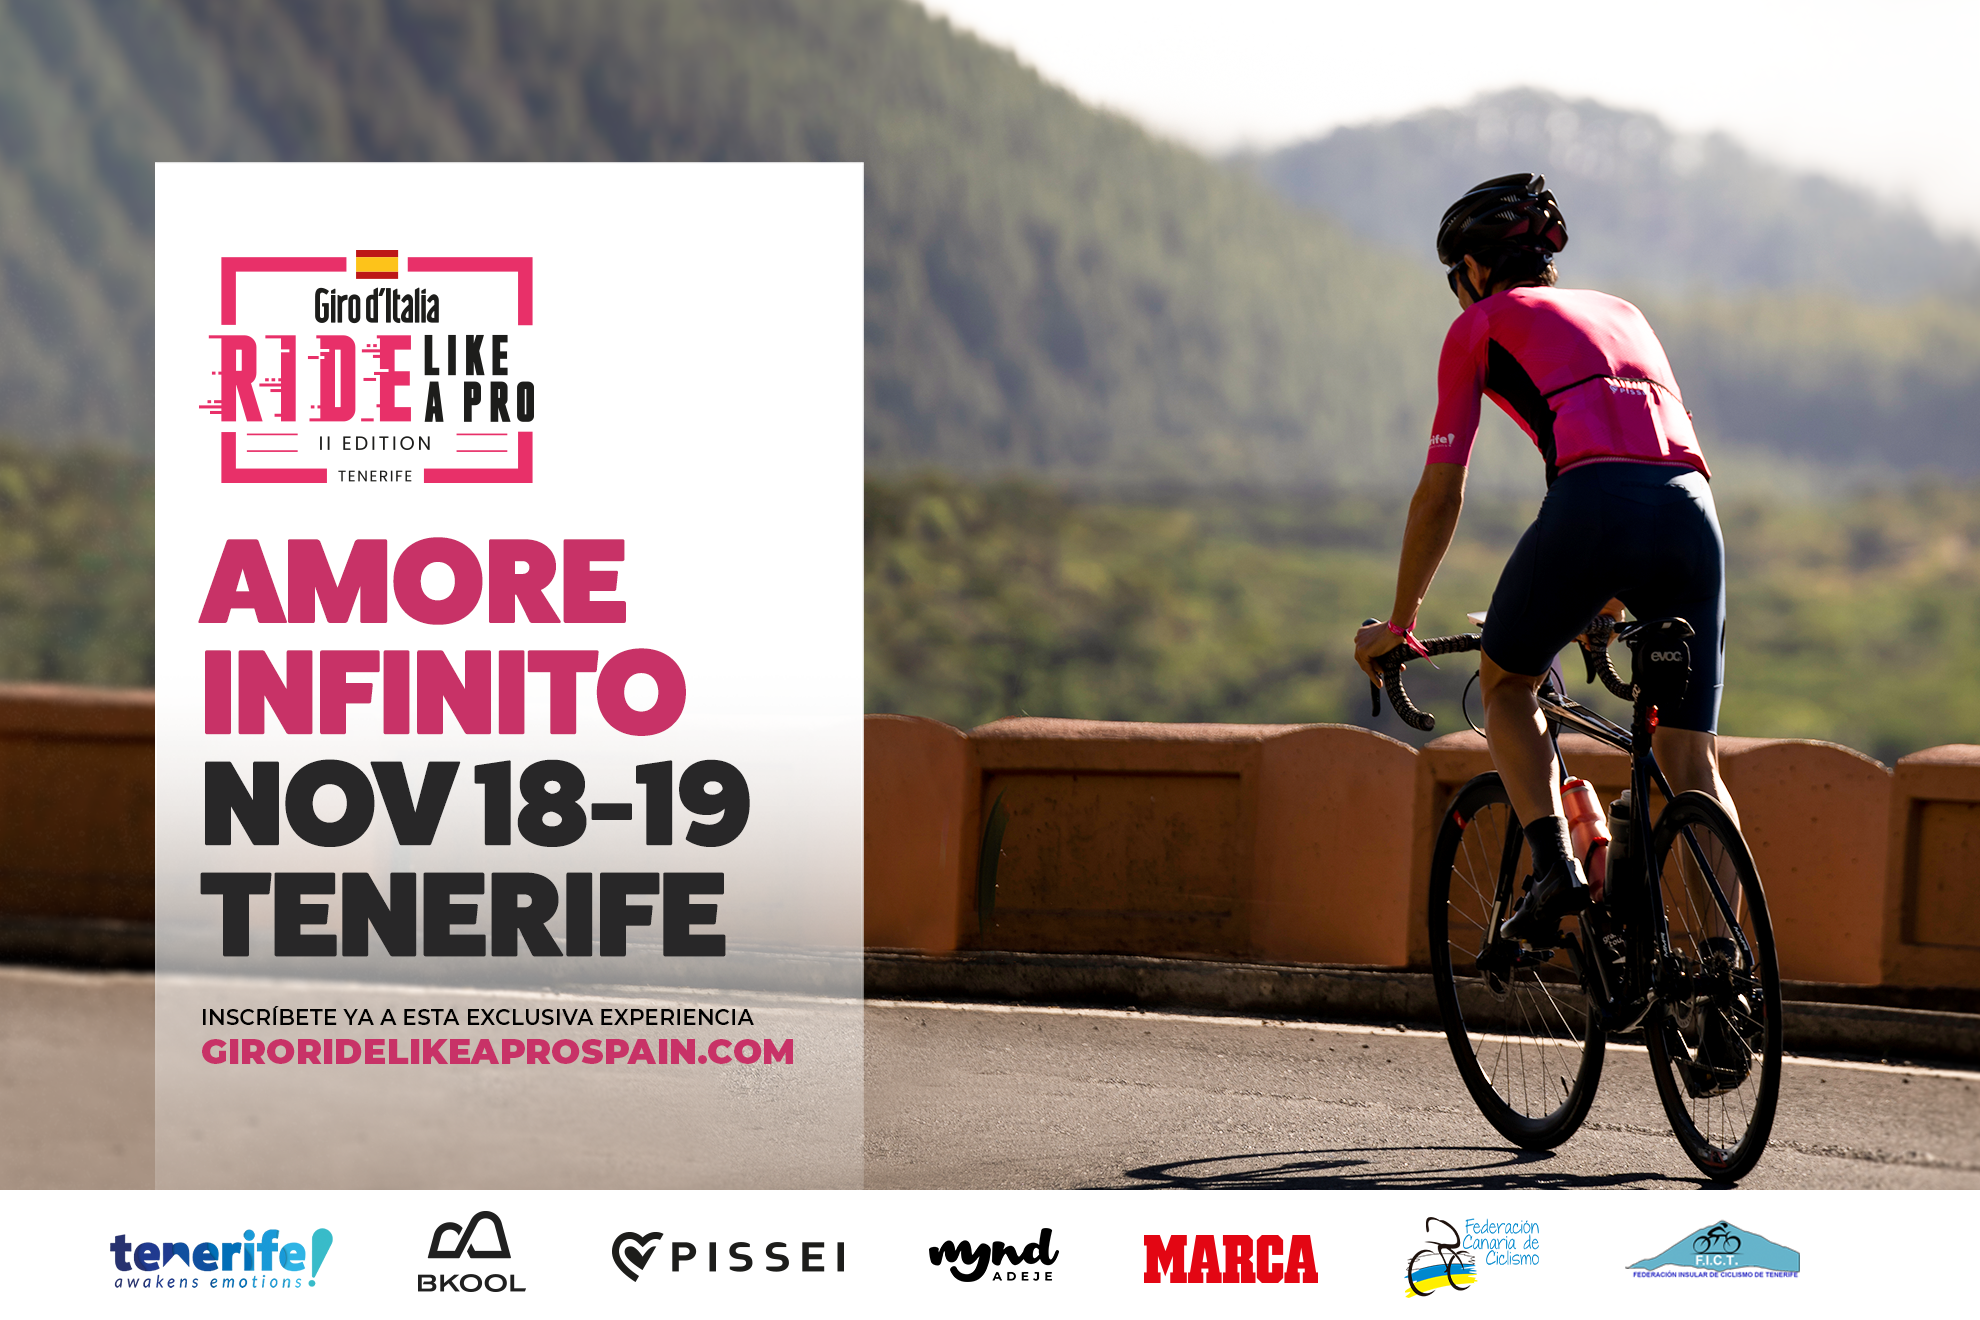 La magia del Giro tambin est en Espaa: as es la 'Corsa Rosa' de Tenerife